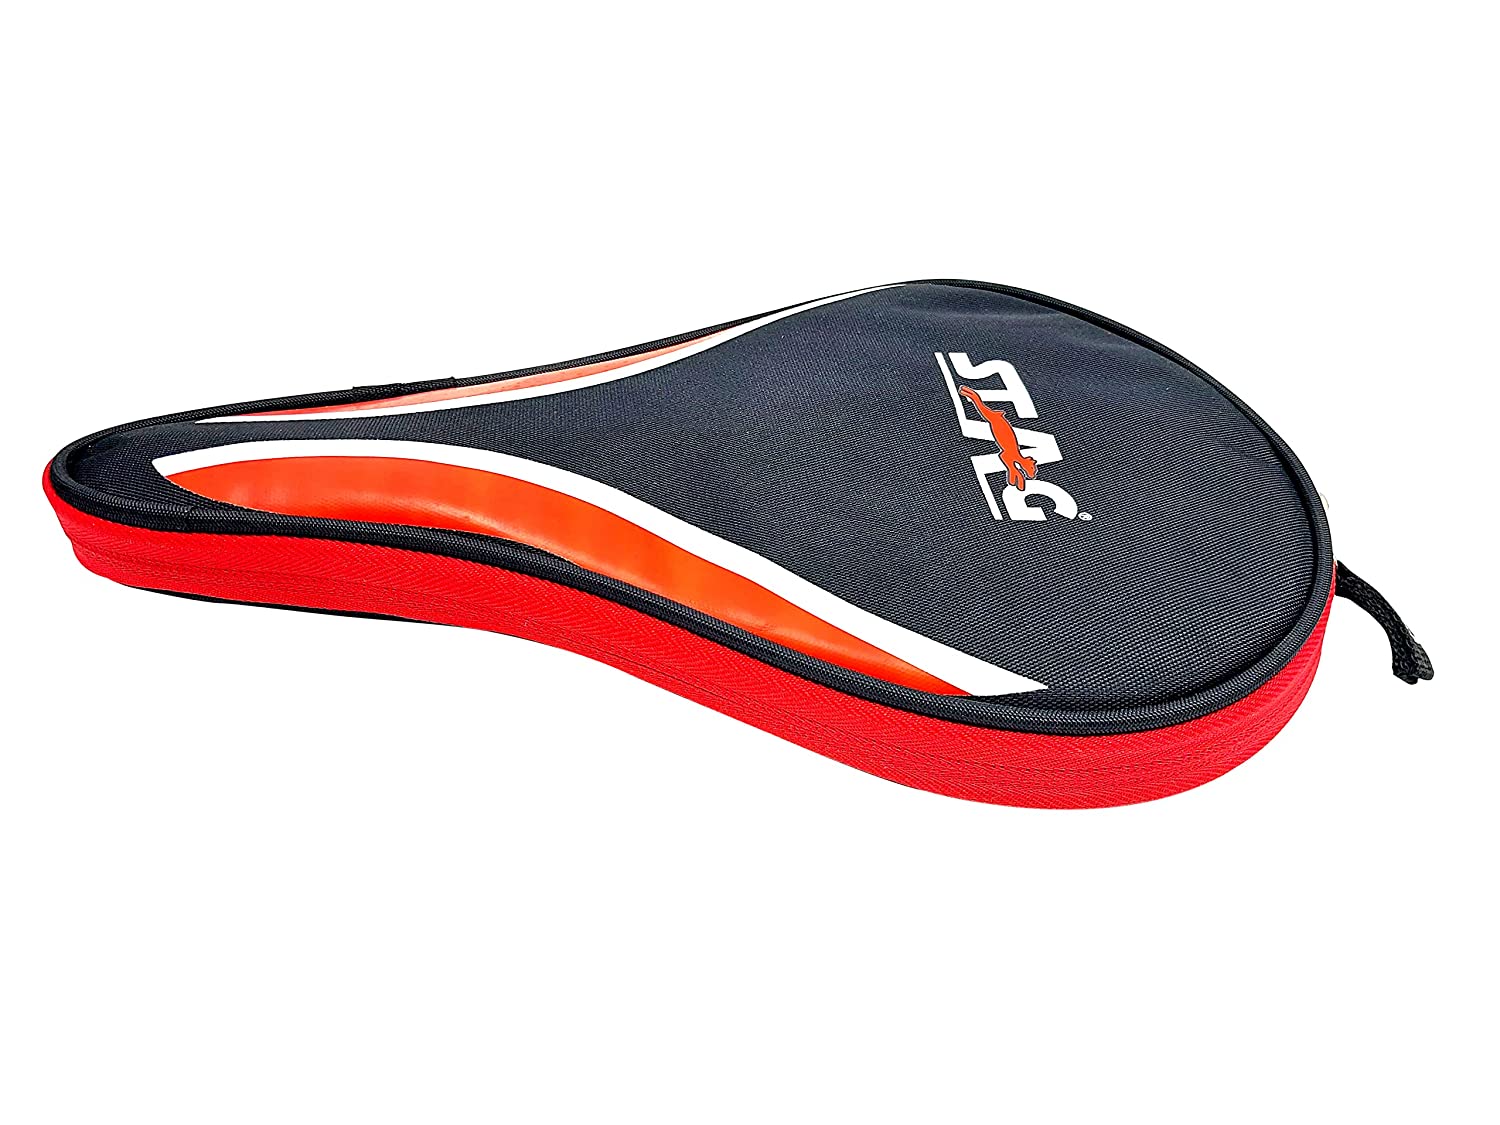 Premium Stag Table Tennis Racket Case-Stroke, Waterproof and Soft Feel